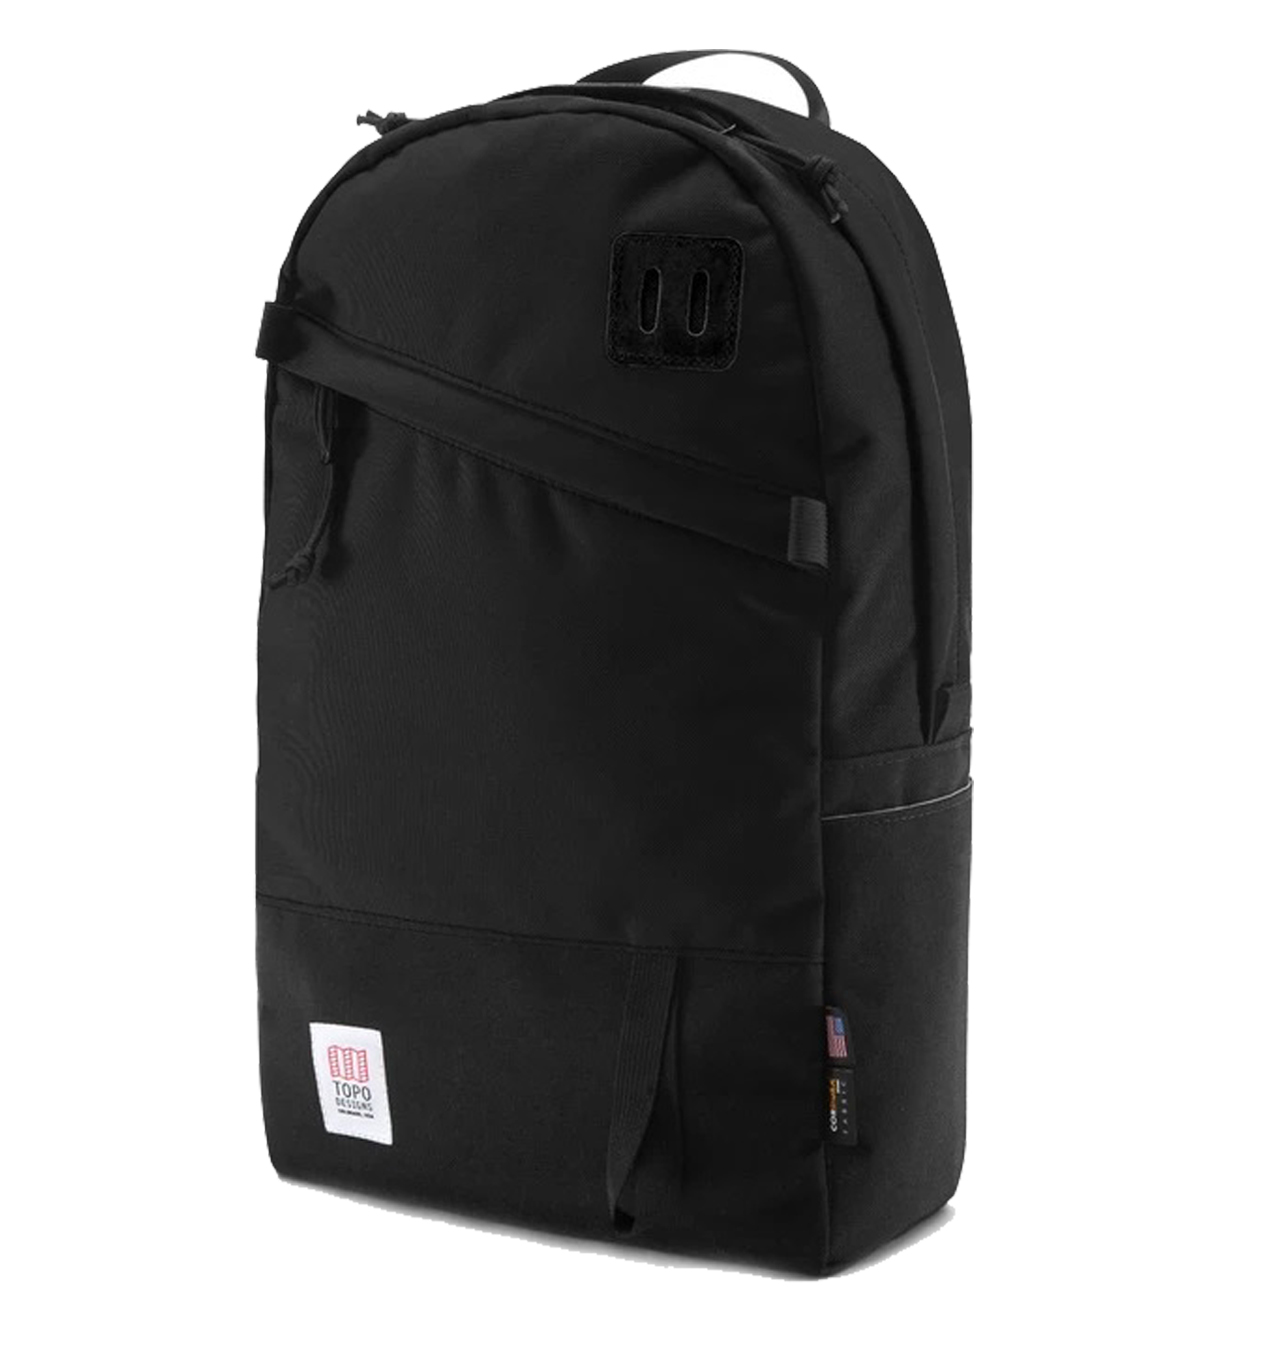 TOPO Designs - Daypack - Black